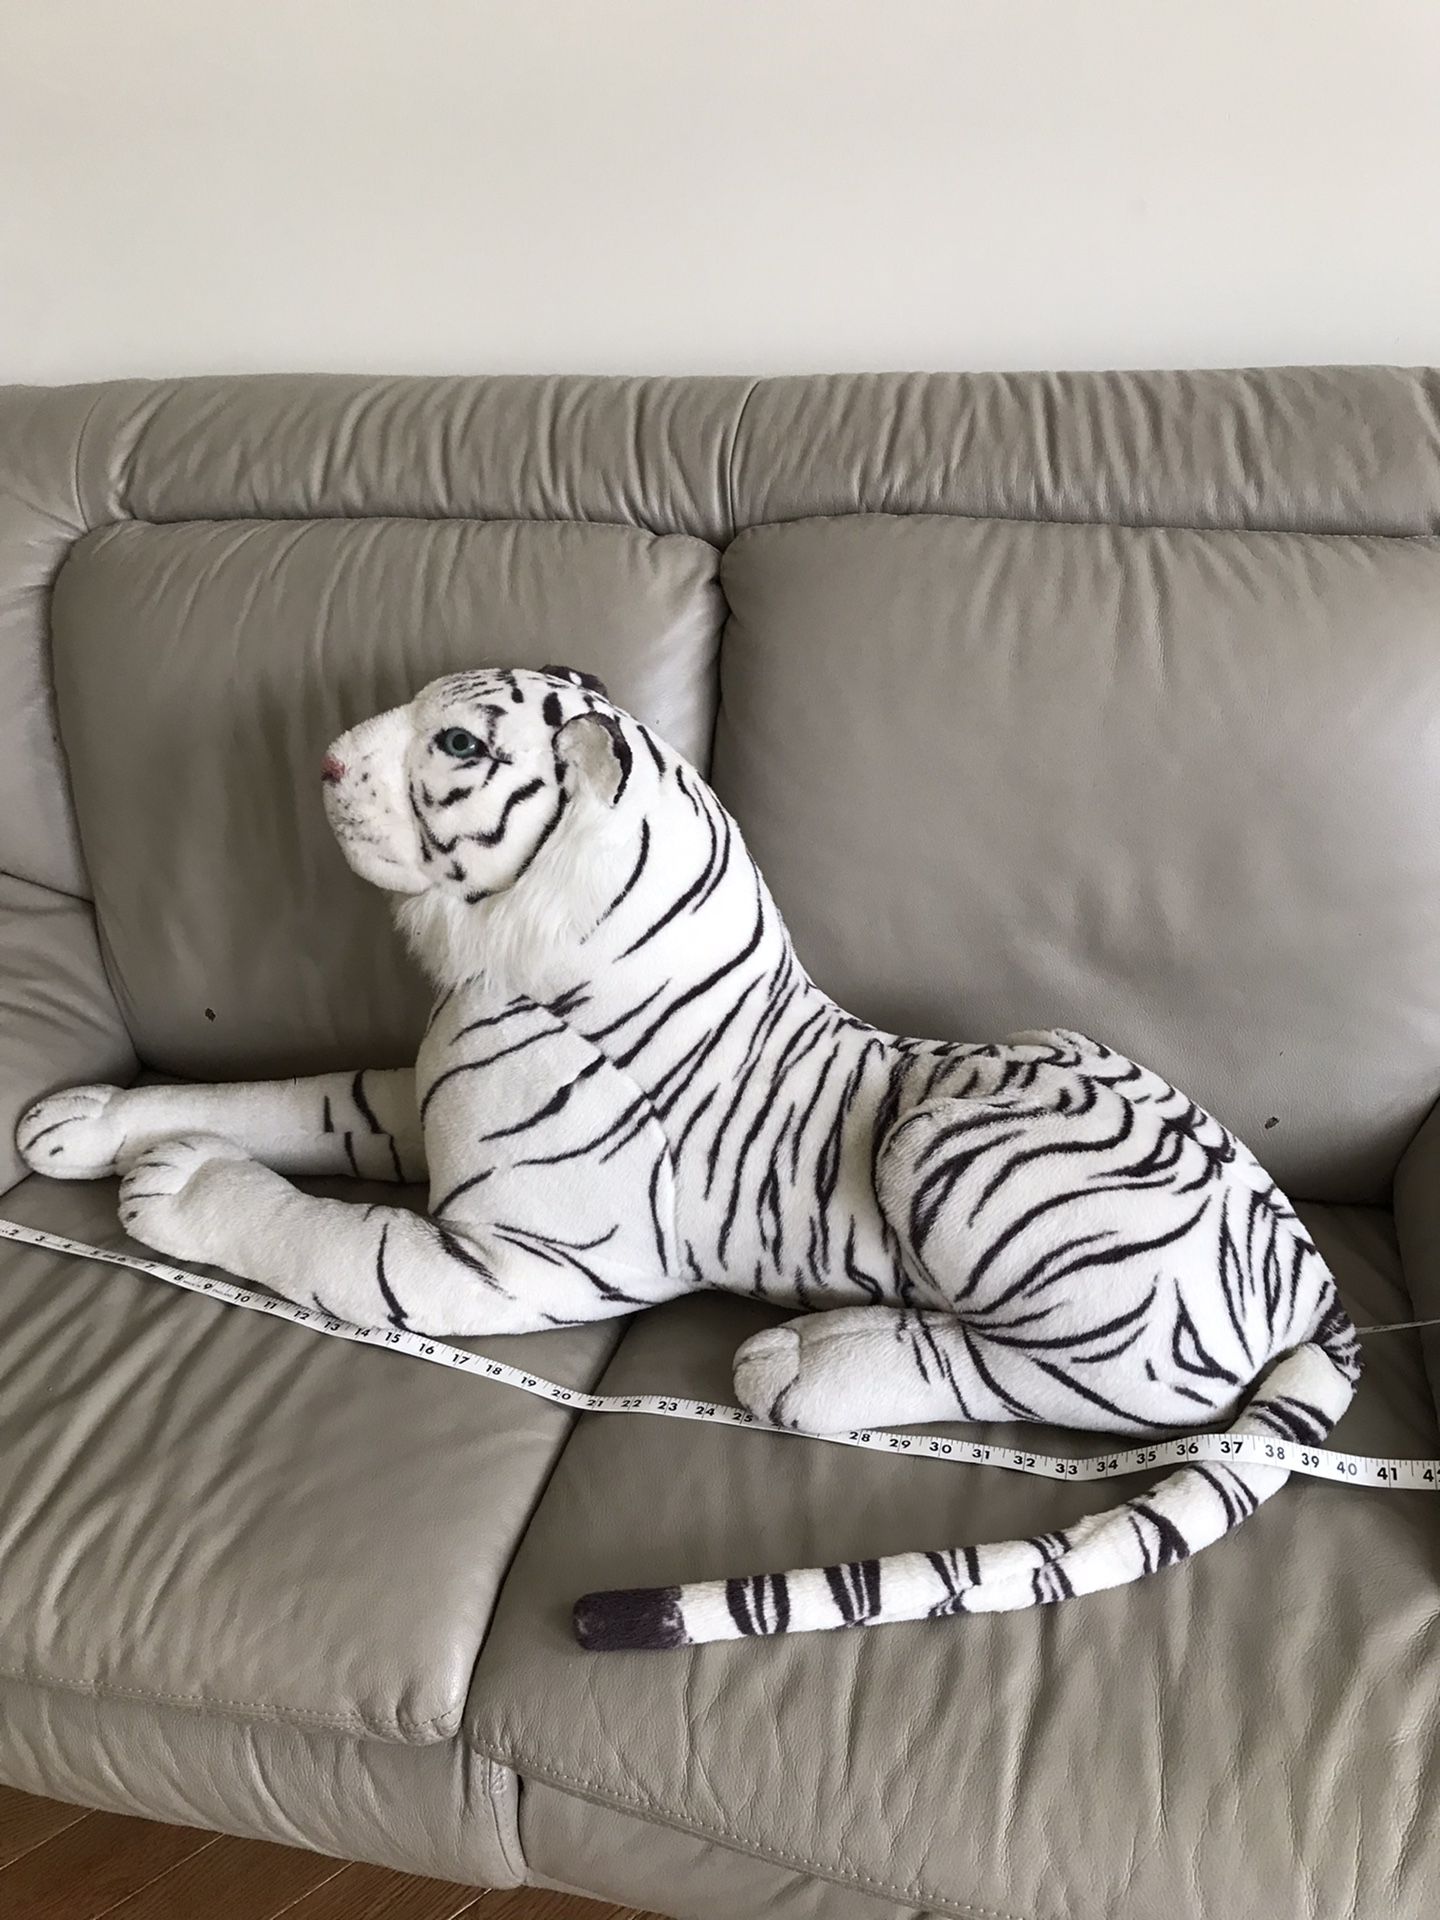 Giant stuffed tiger